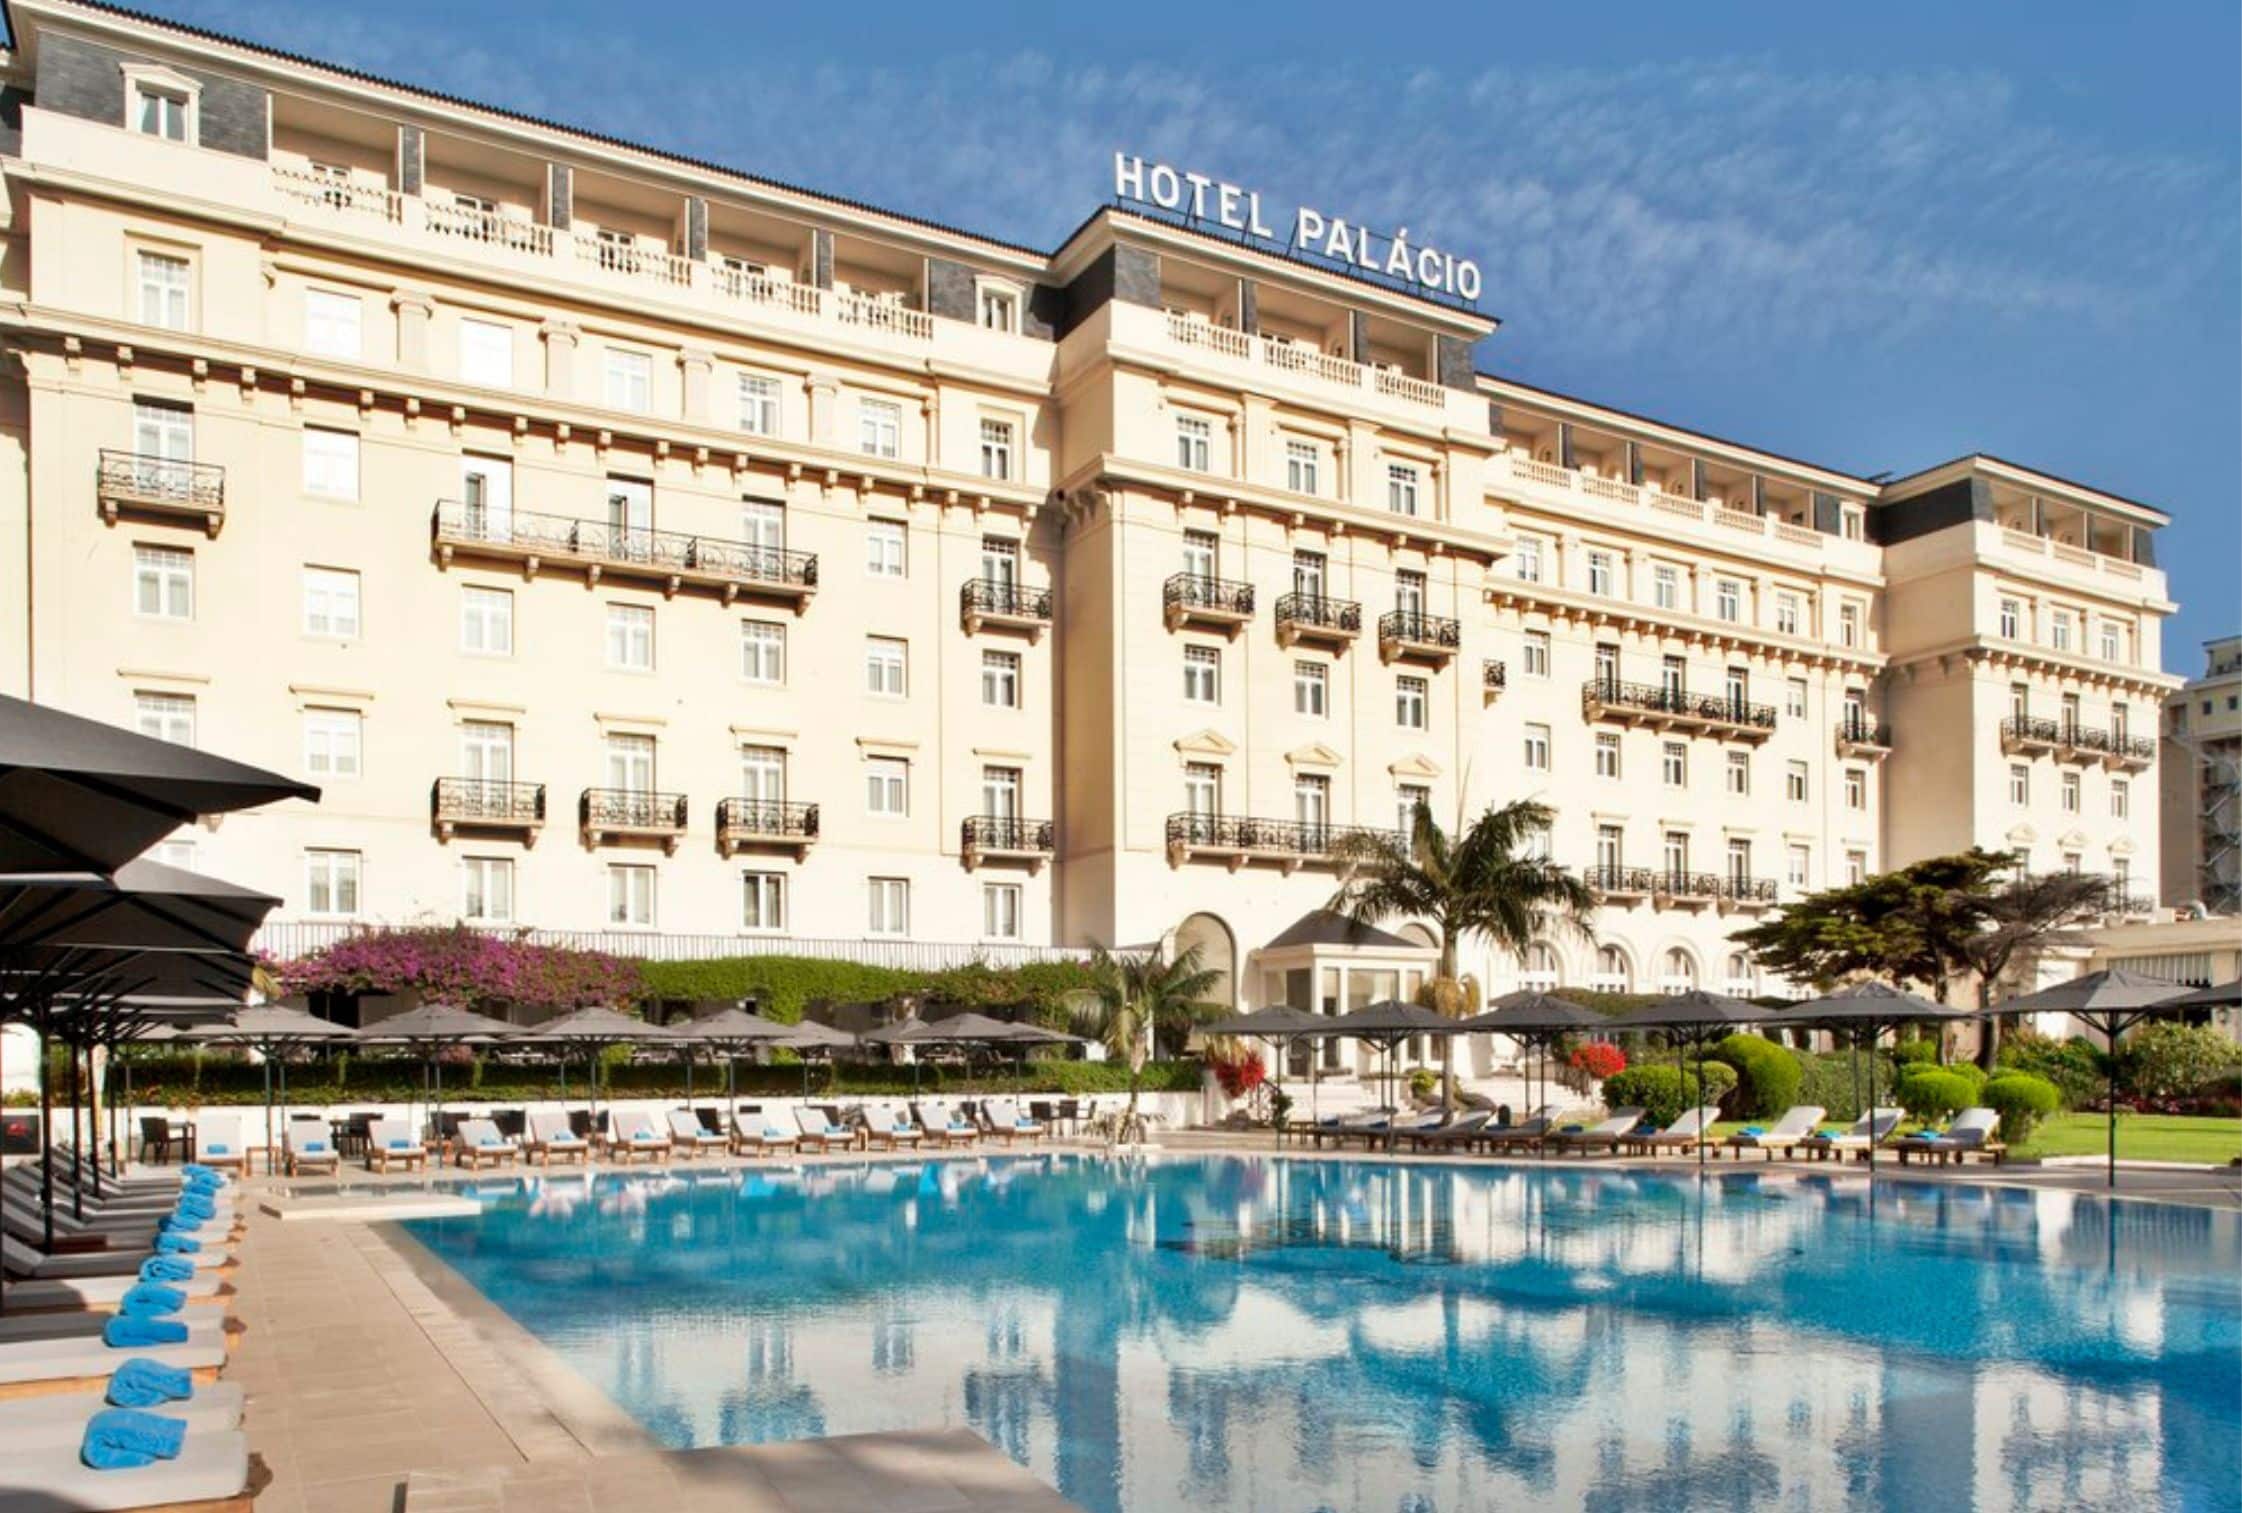 Best Villa Destinations: Palacio Estoril Hotel